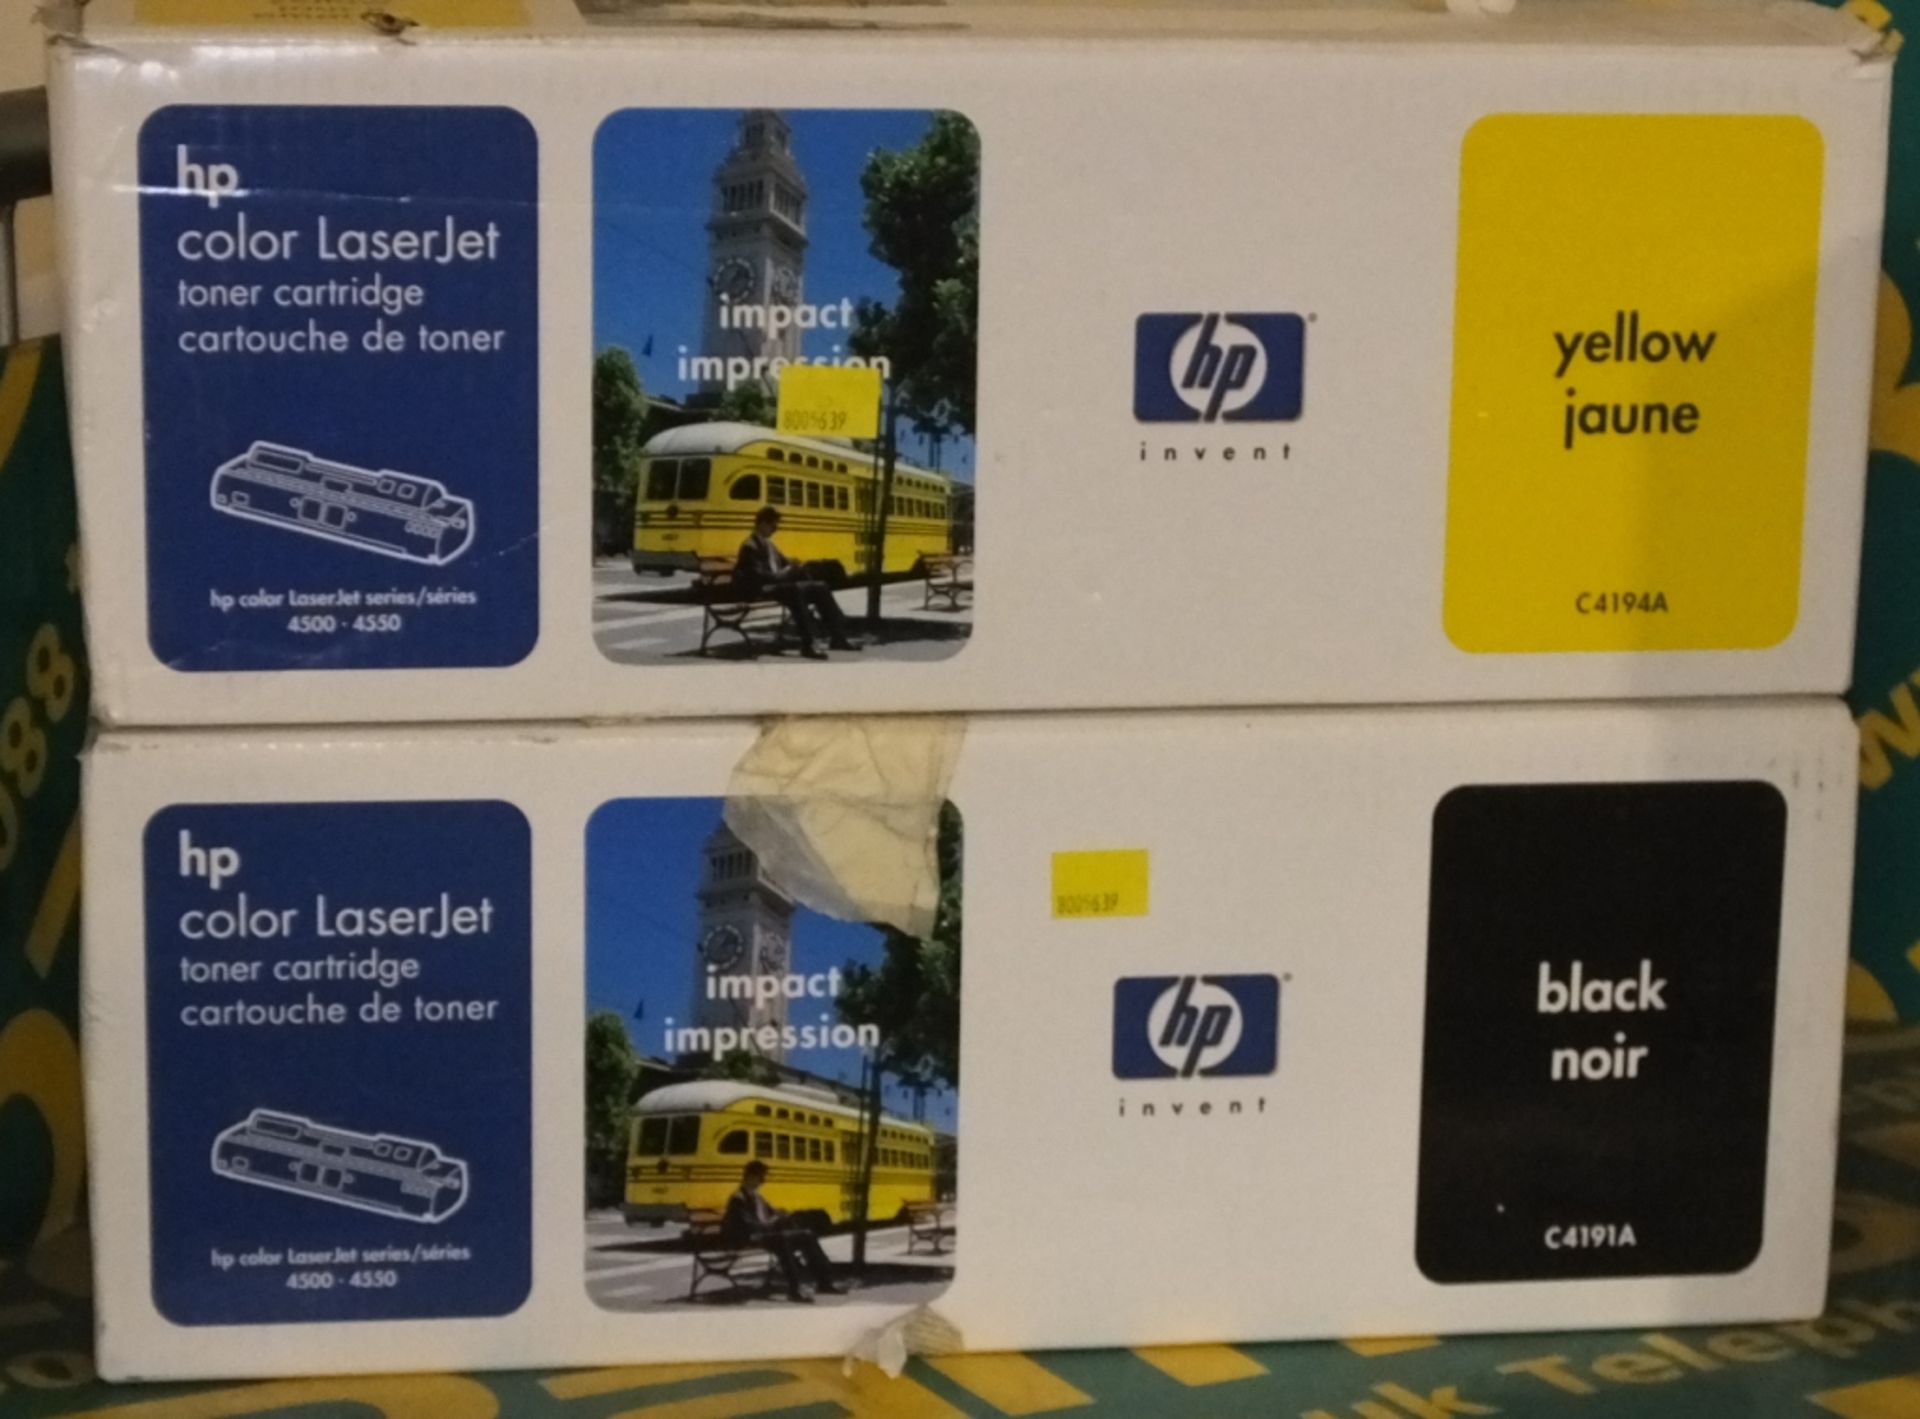 3x HP Printer Cartridges - Yellow C4194A, 1x HP Printer Cartridge - BLack C4191A - Image 3 of 3